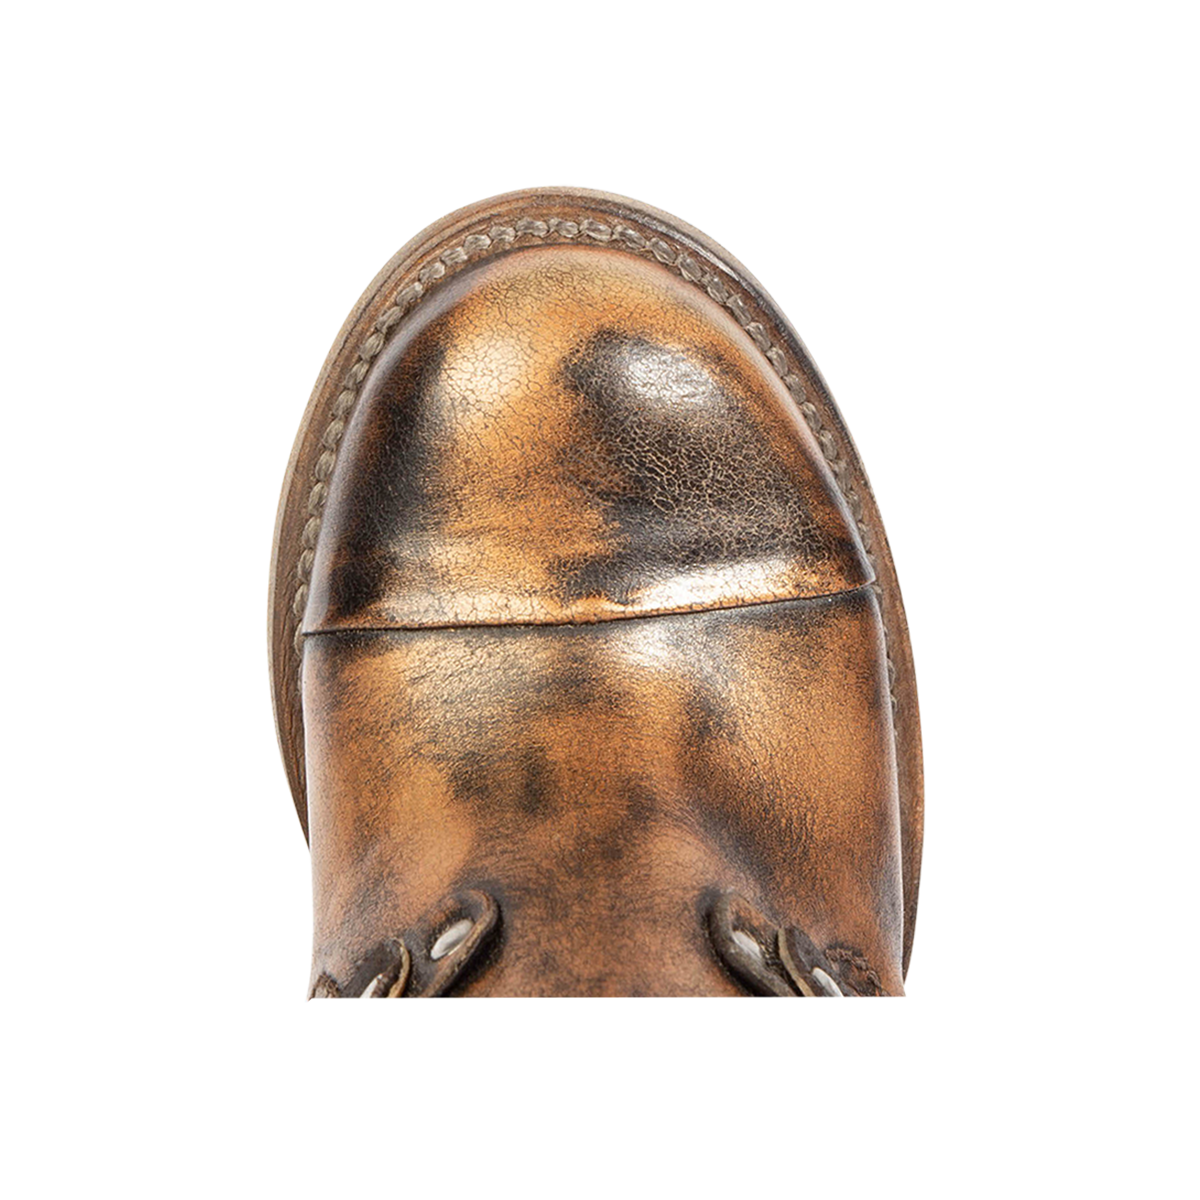 Top view showing round toe on FREEBIRD women's Beckett bronze leather bootie